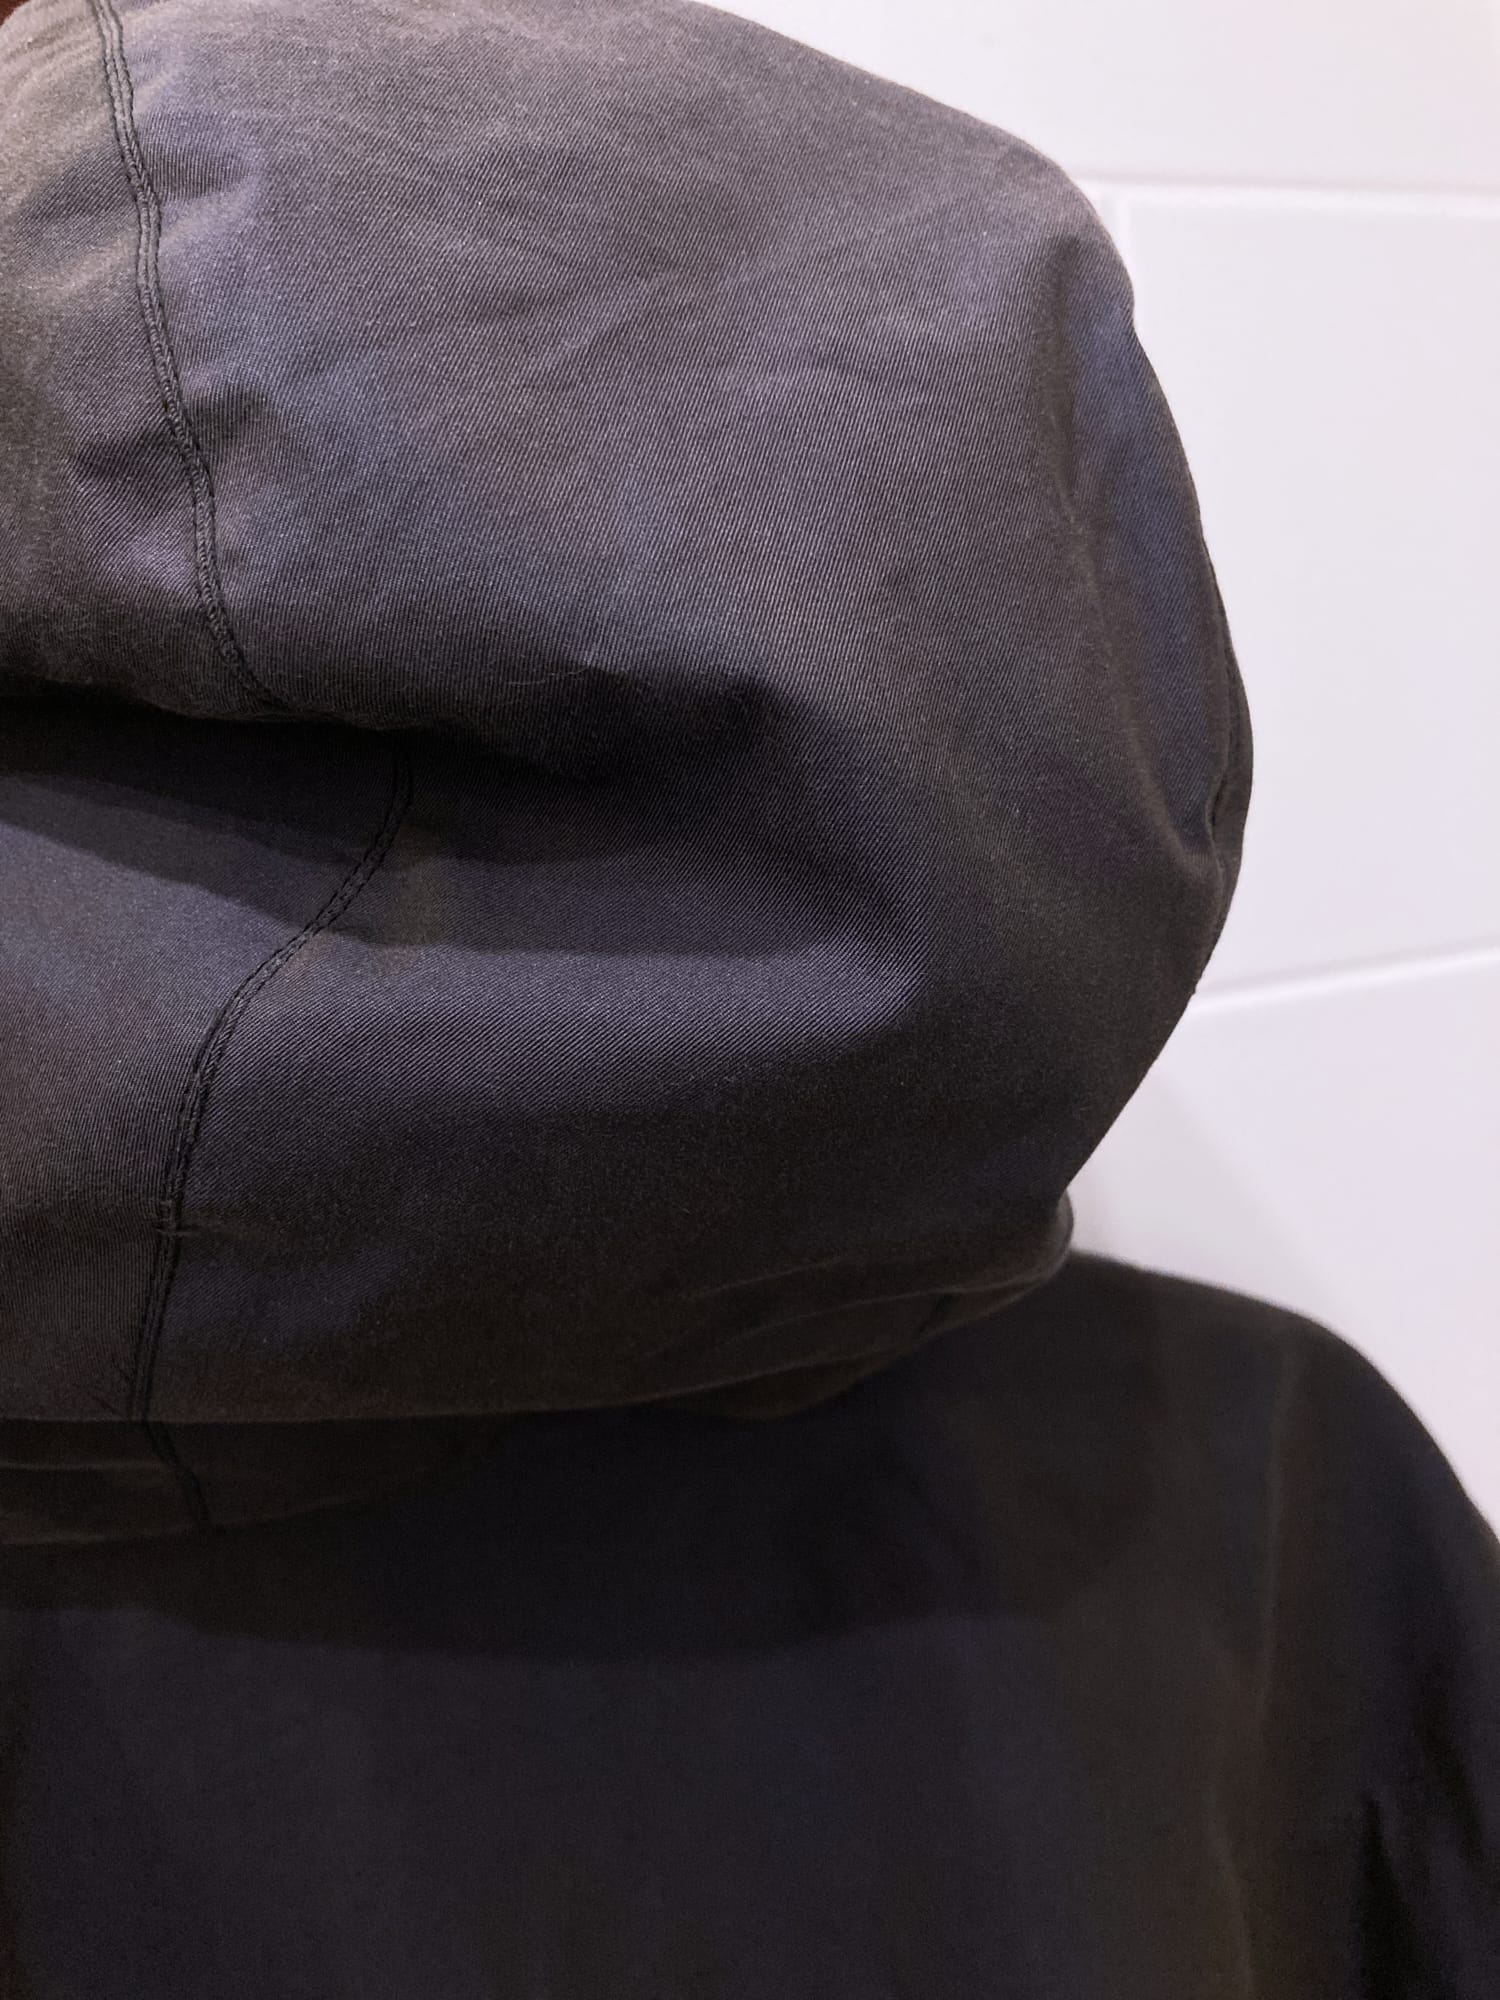 Dirk Bikkembergs 1990s dark grey cotton silk hooded jacket